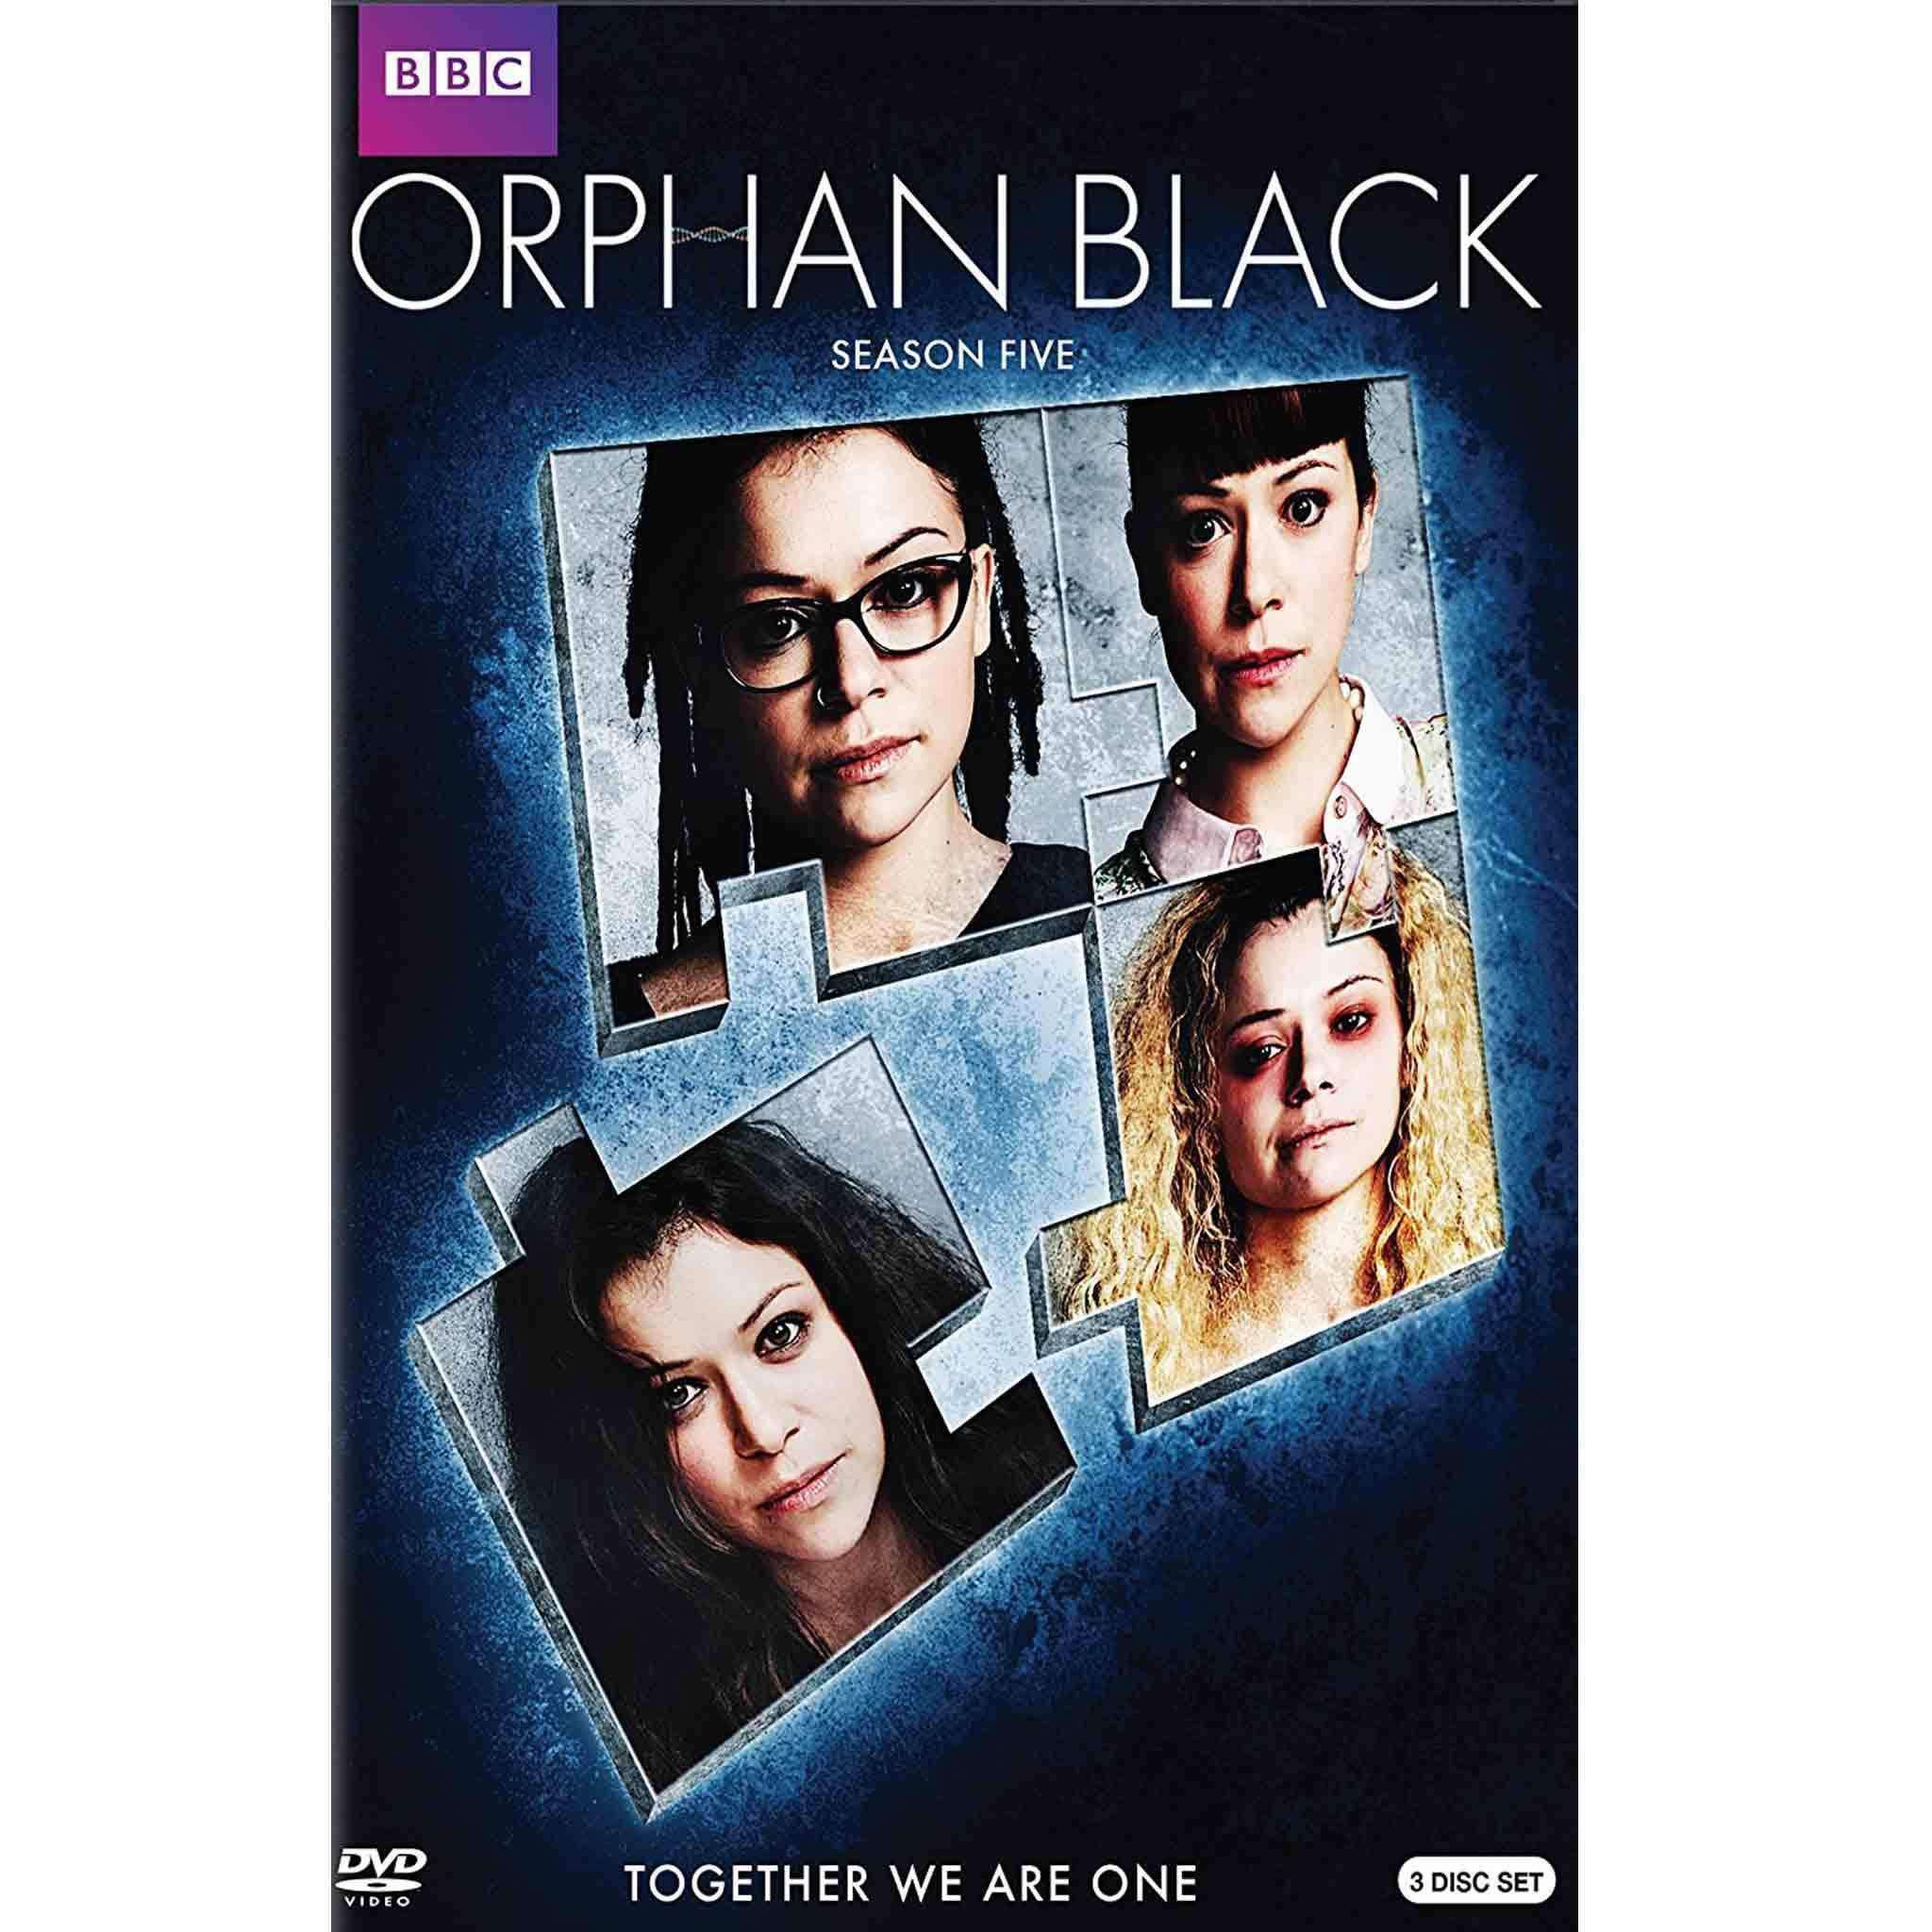 Orphan Black: Season Five (DVD) BBC America DVDs & Blu-ray Discs > DVDs